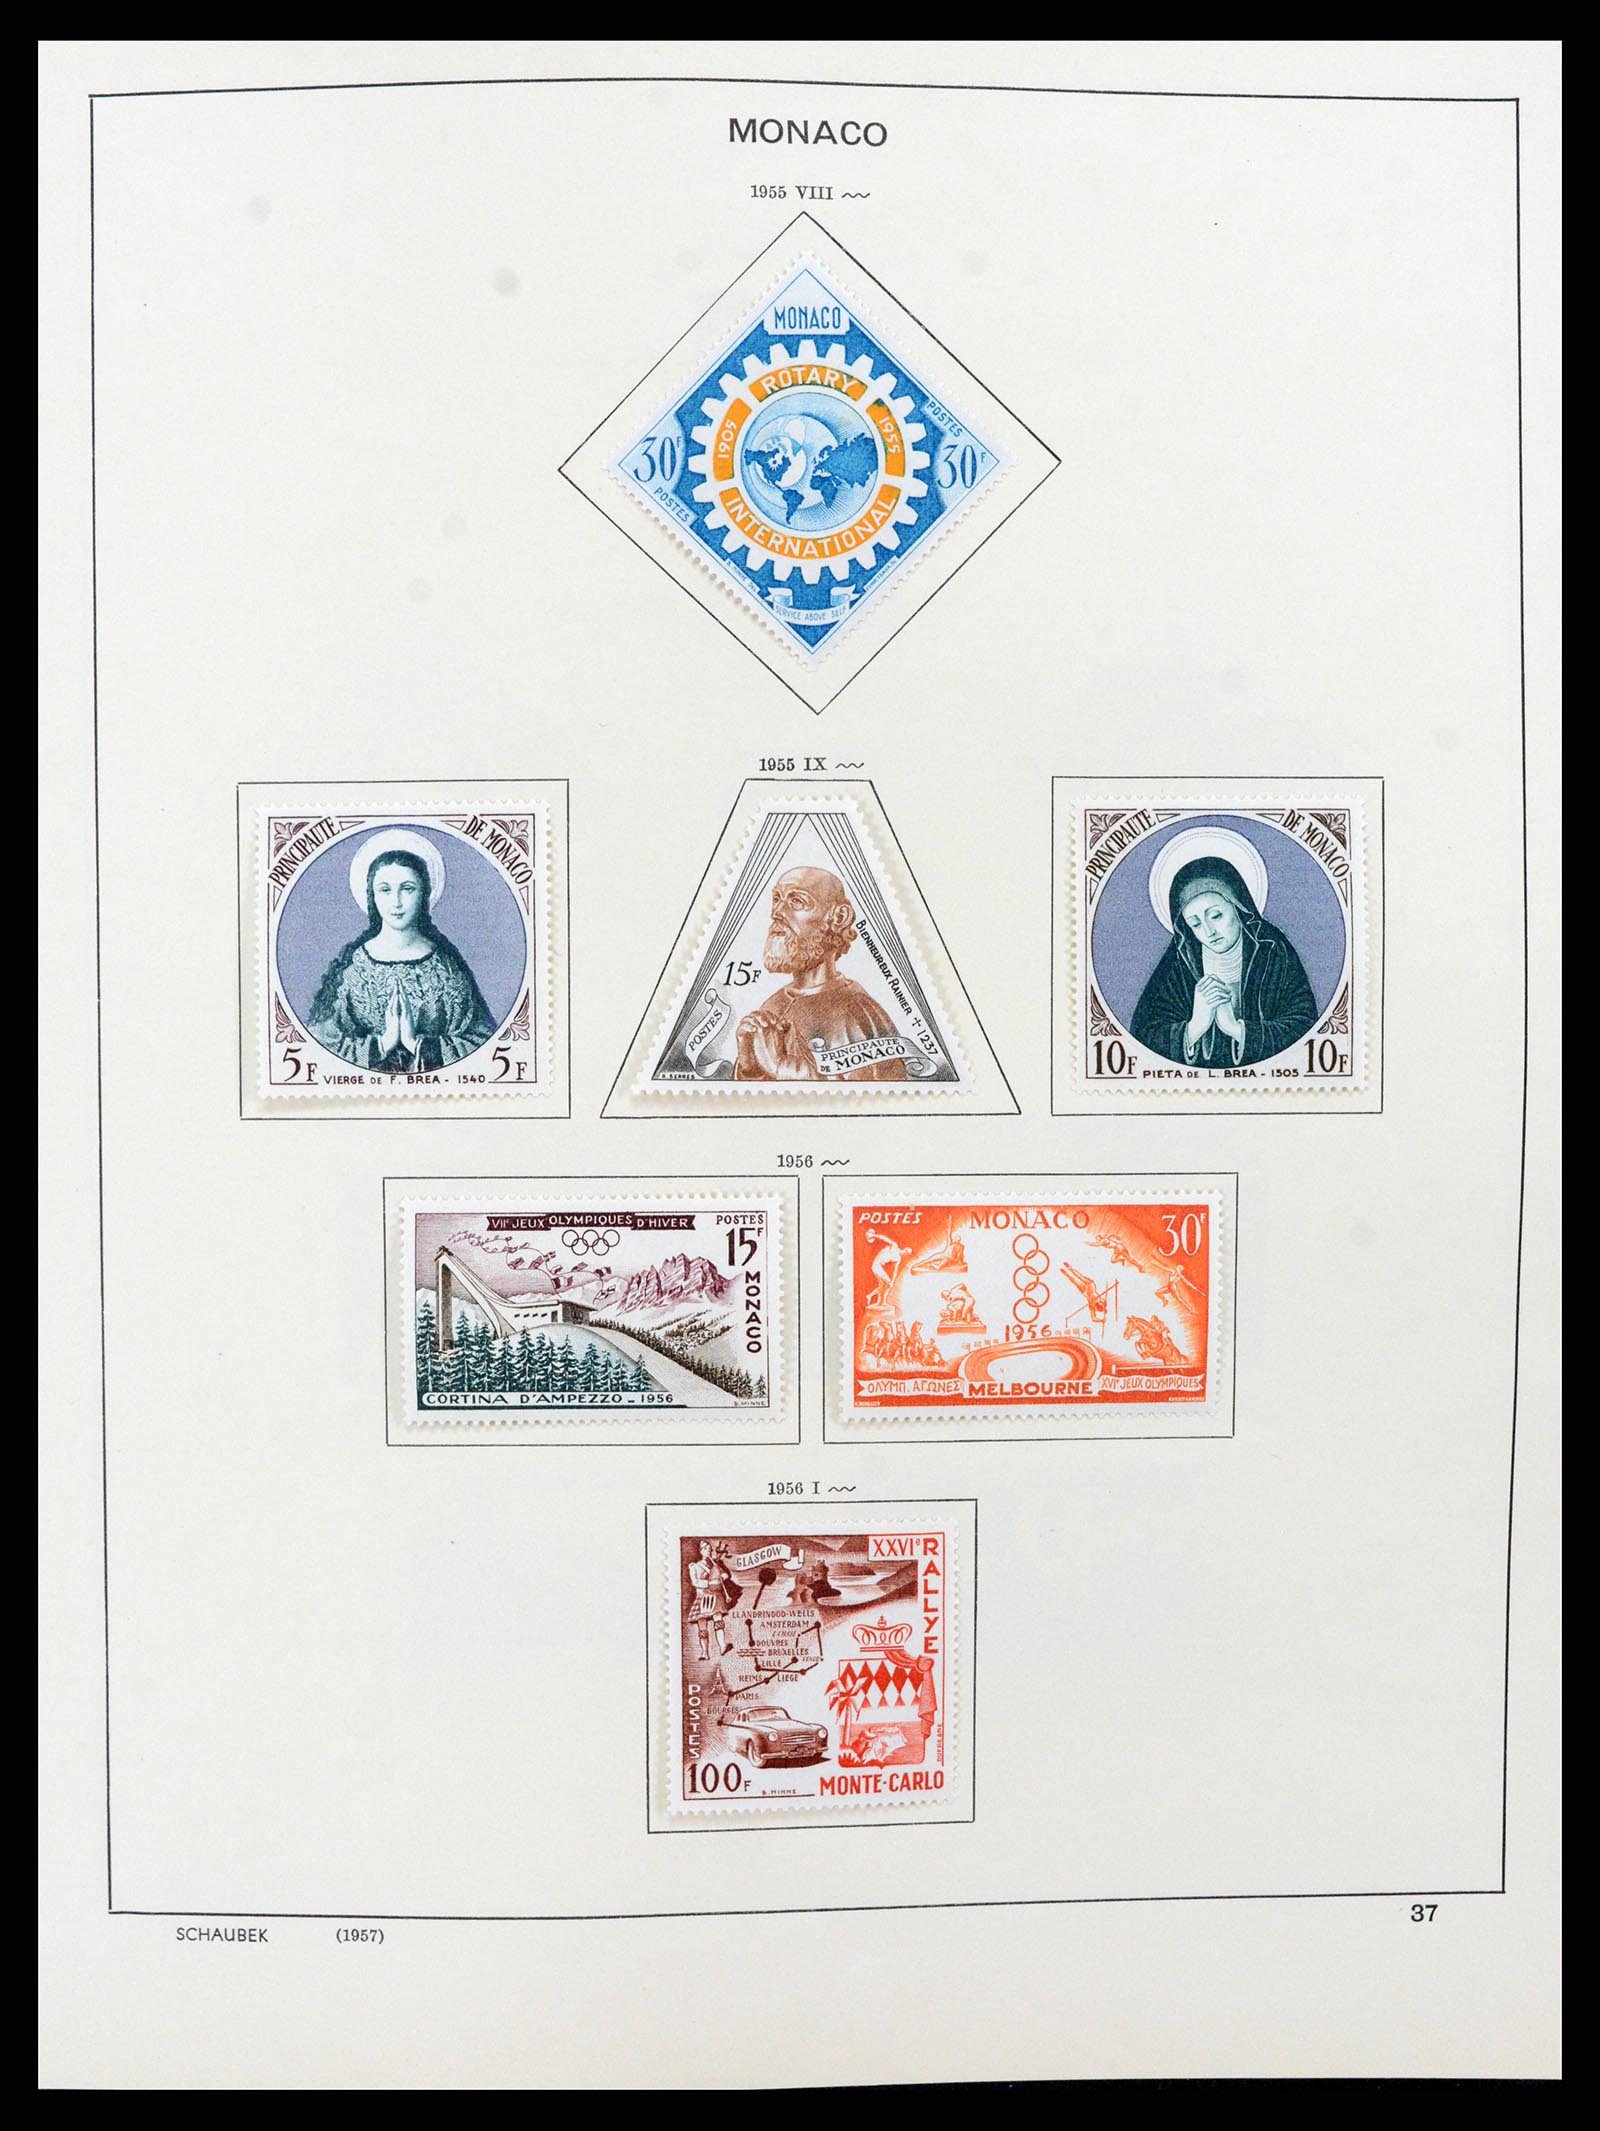 37570 042 - Stamp collection 37570 Monaco 1885-2013.